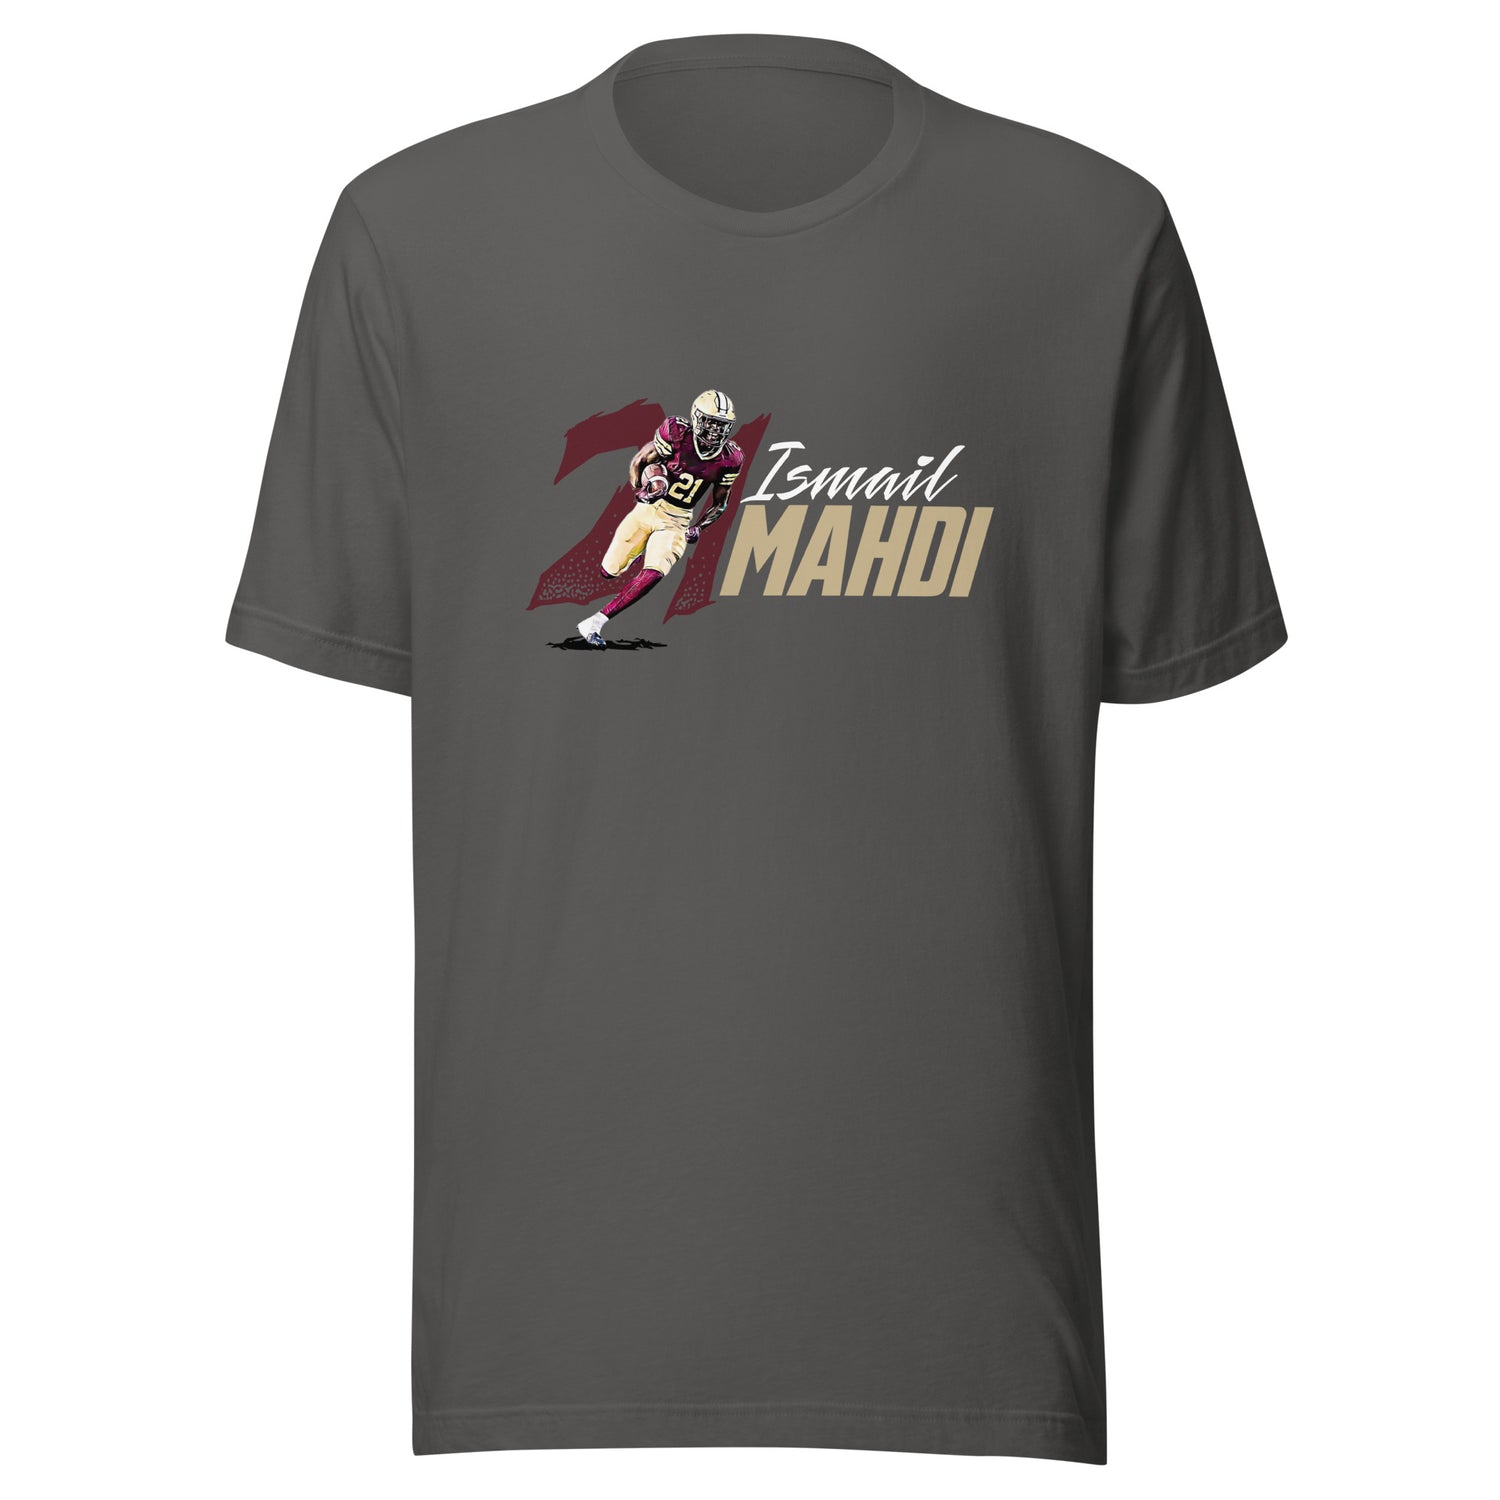 Ismail Mahdi "Gameday" t-shirt - Fan Arch